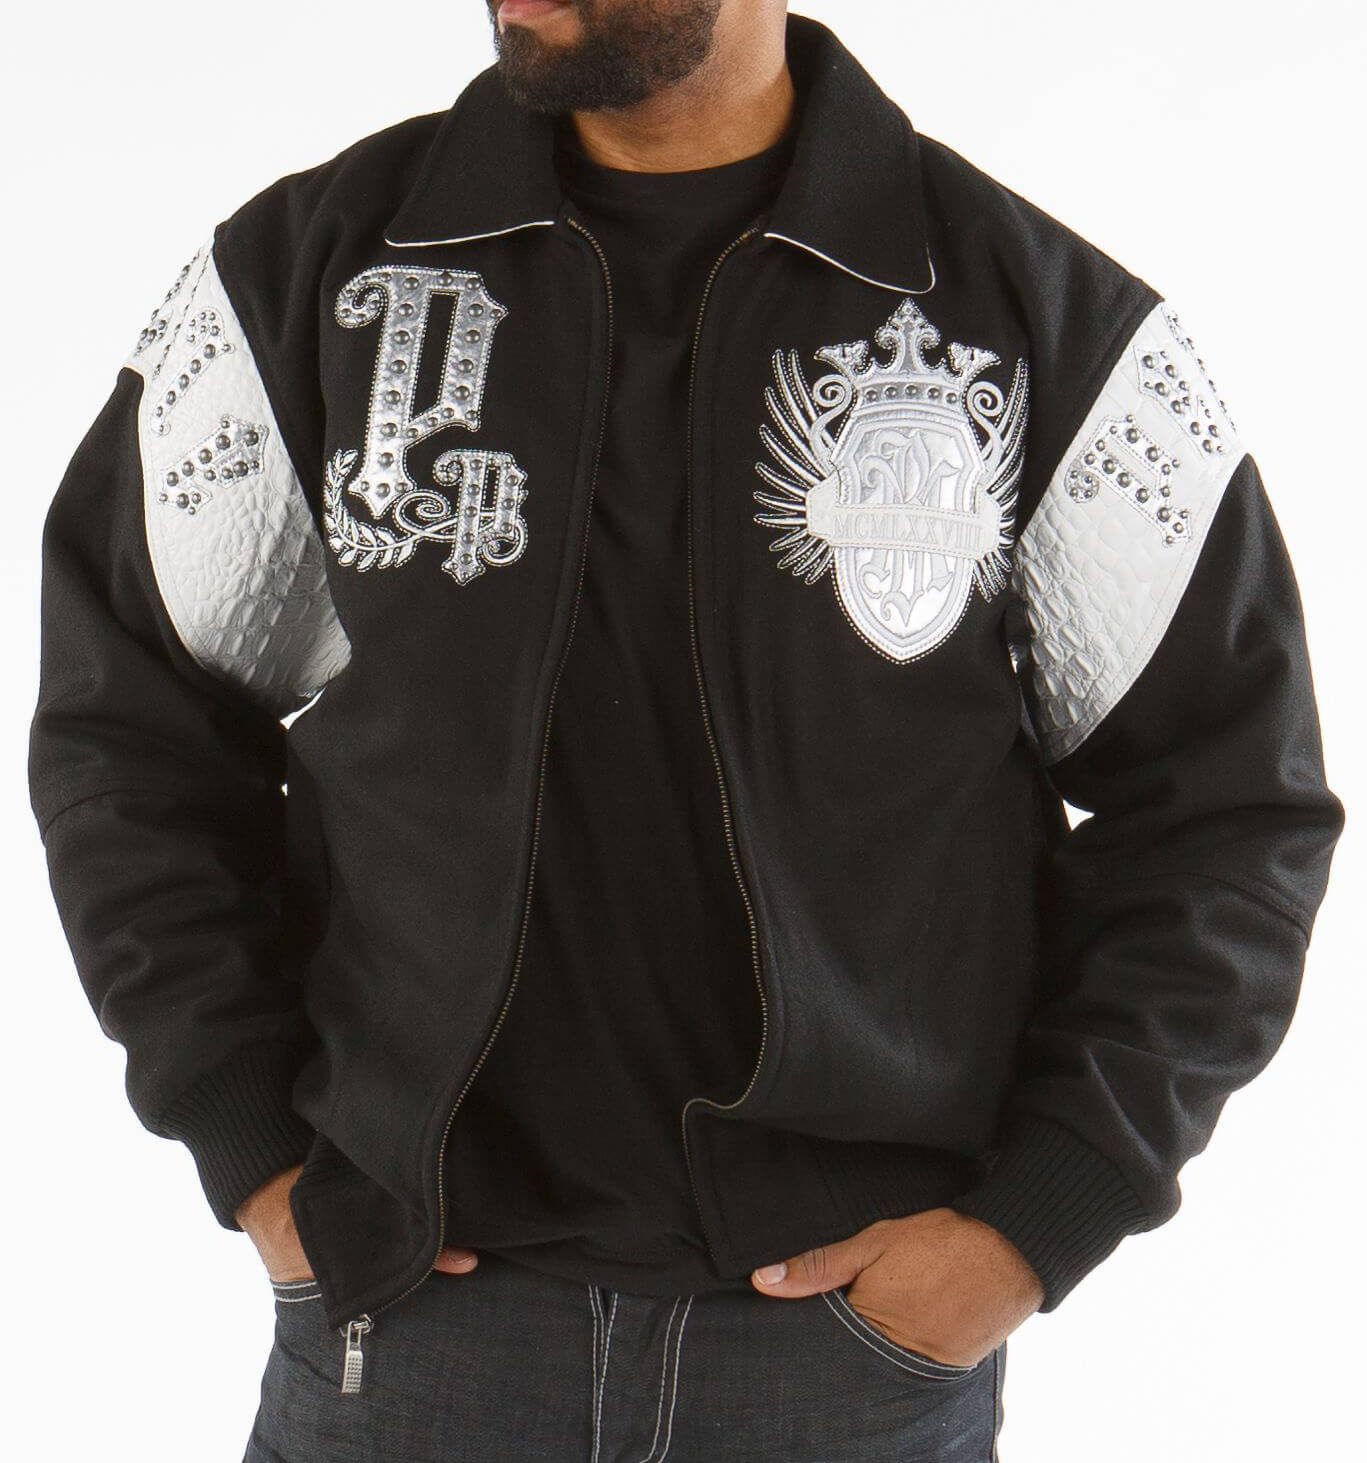 Pelle Dynasty Studded Leather Jacket